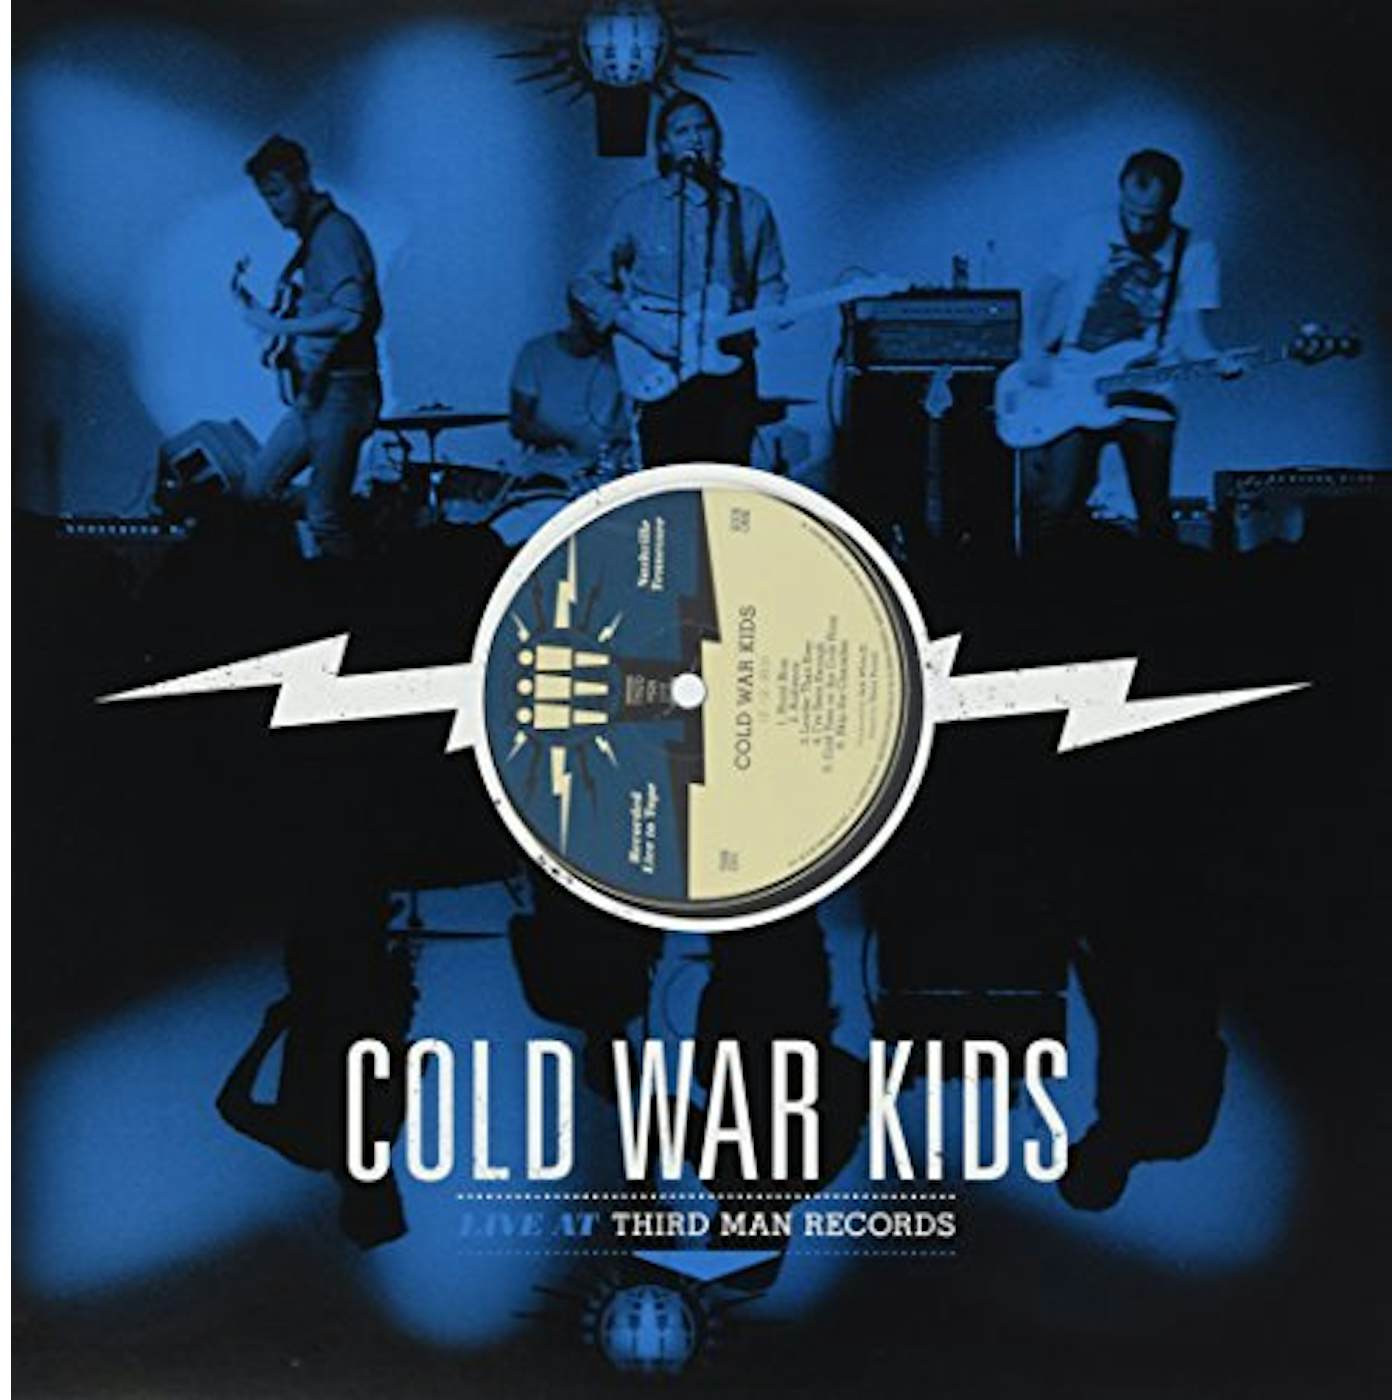 Cold War Kids LIVE AT THIRD MAN RECORDS Vinyl Record